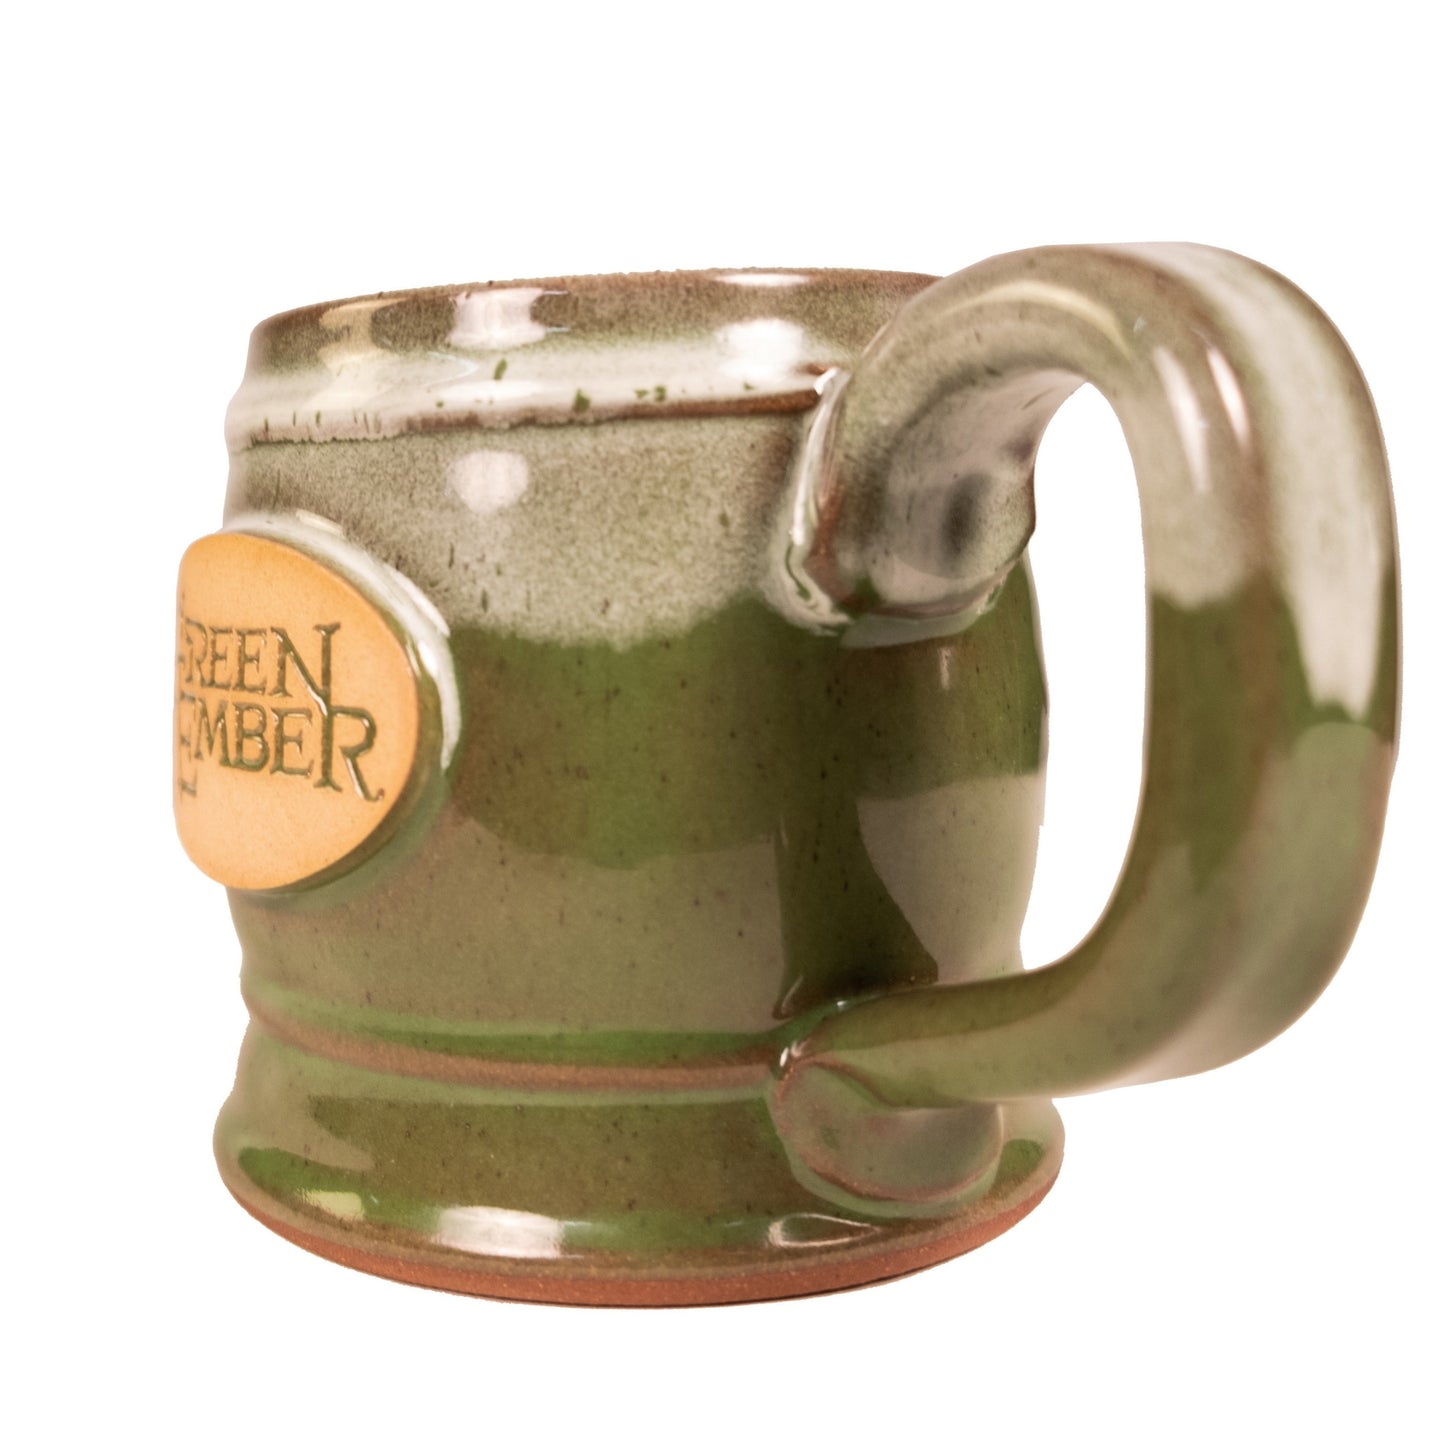 Handcrafted Green Ember Mug